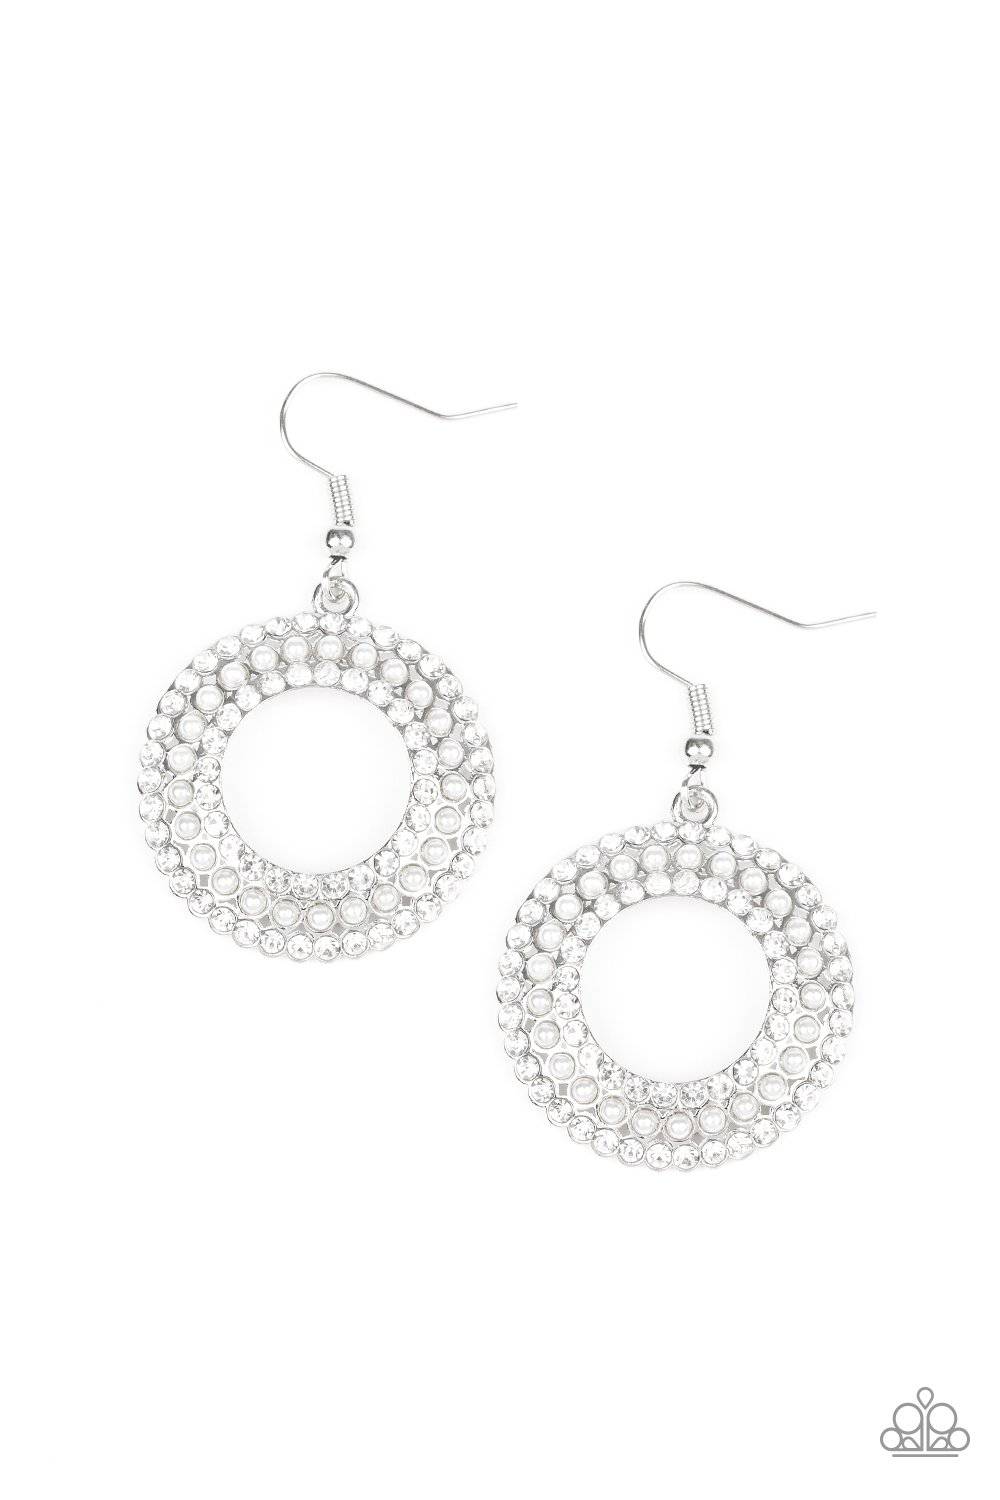 Sparkle Splurge - White Pearl and Rhinestone Earrings - Paparazzi Accessories - GlaMarous Titi Jewels